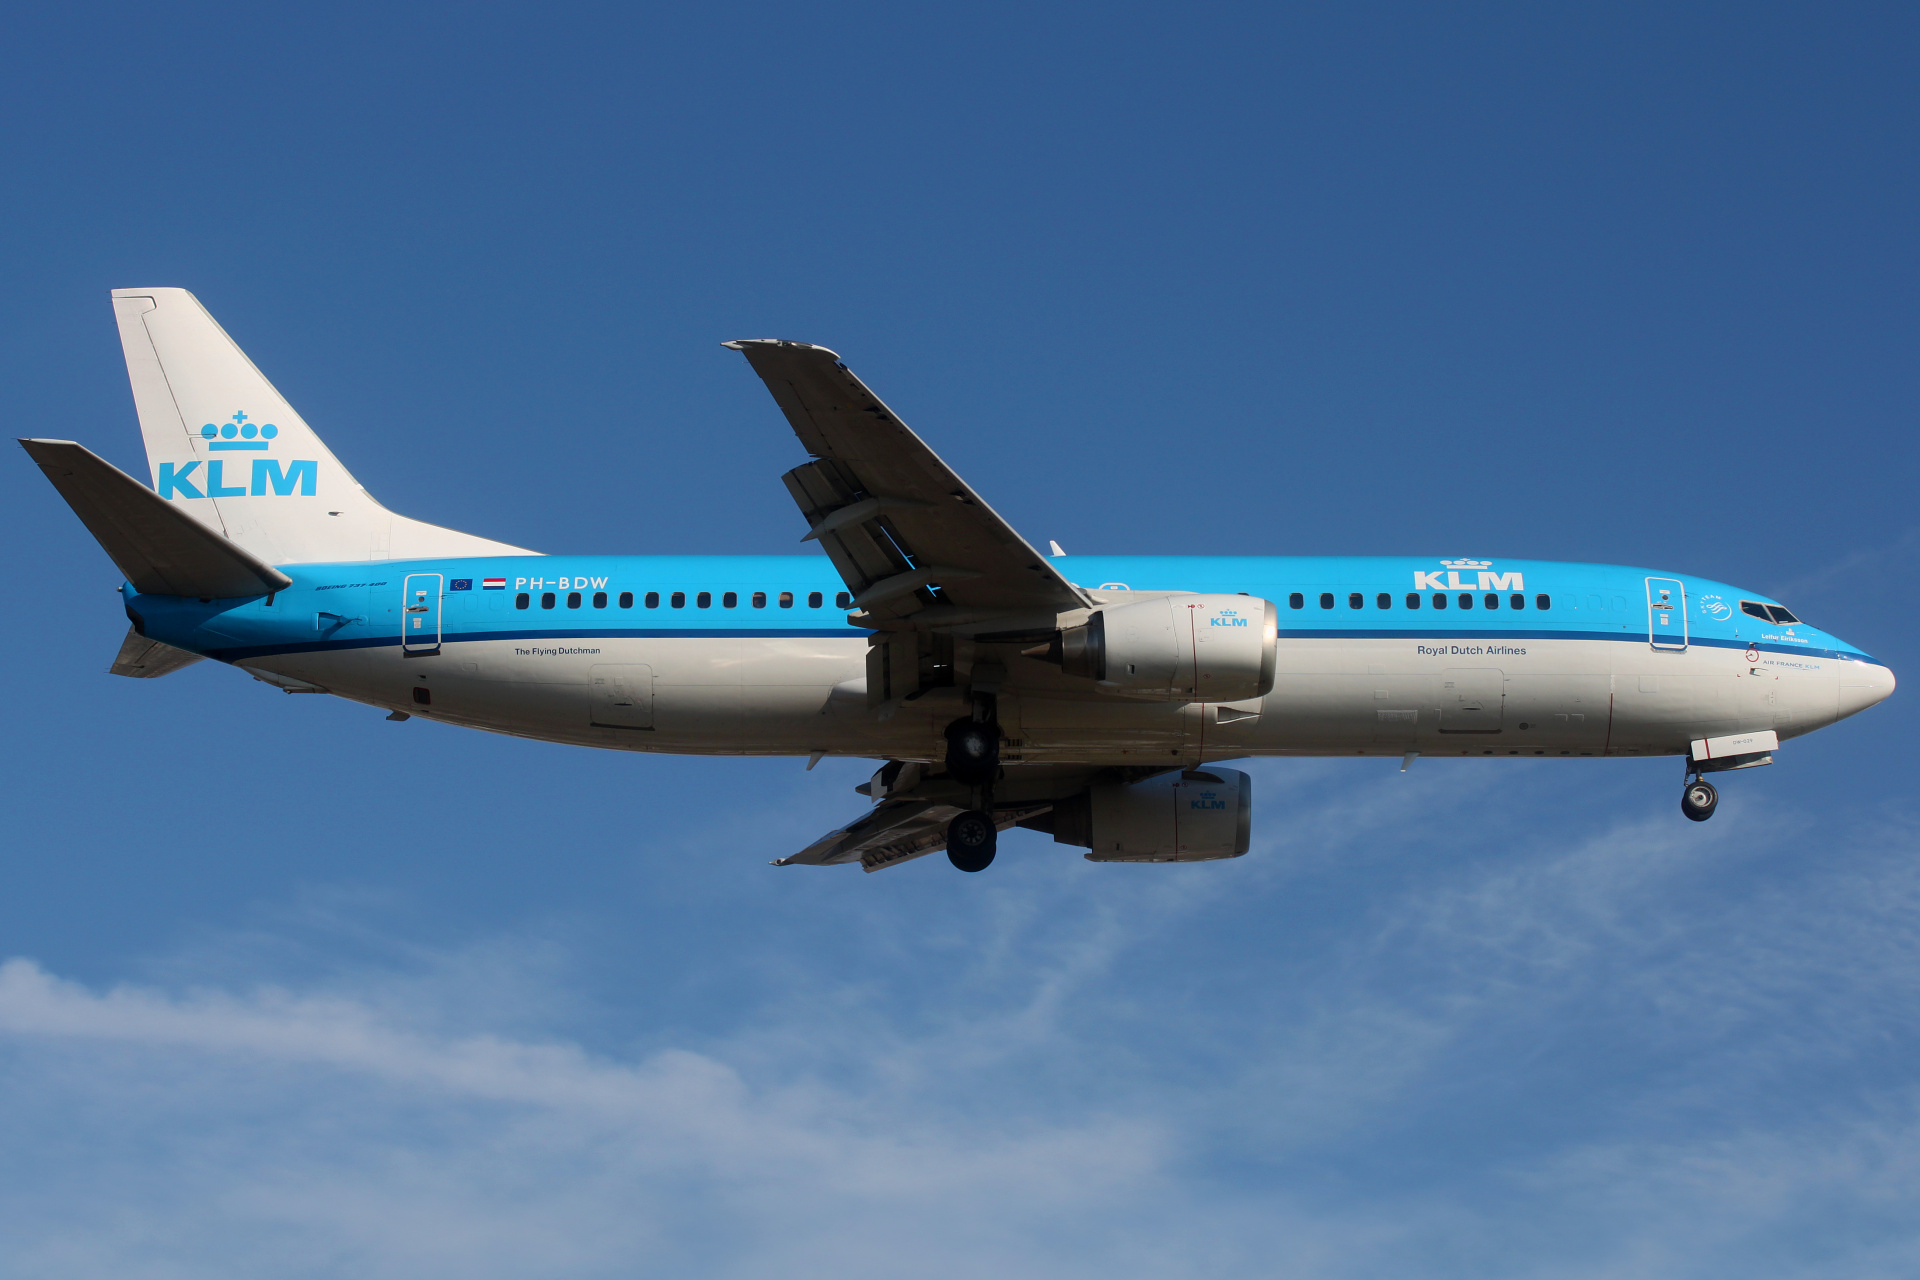 PH-BDW, KLM Royal Dutch Airlines (Aircraft » EPWA Spotting » Boeing 737-400)